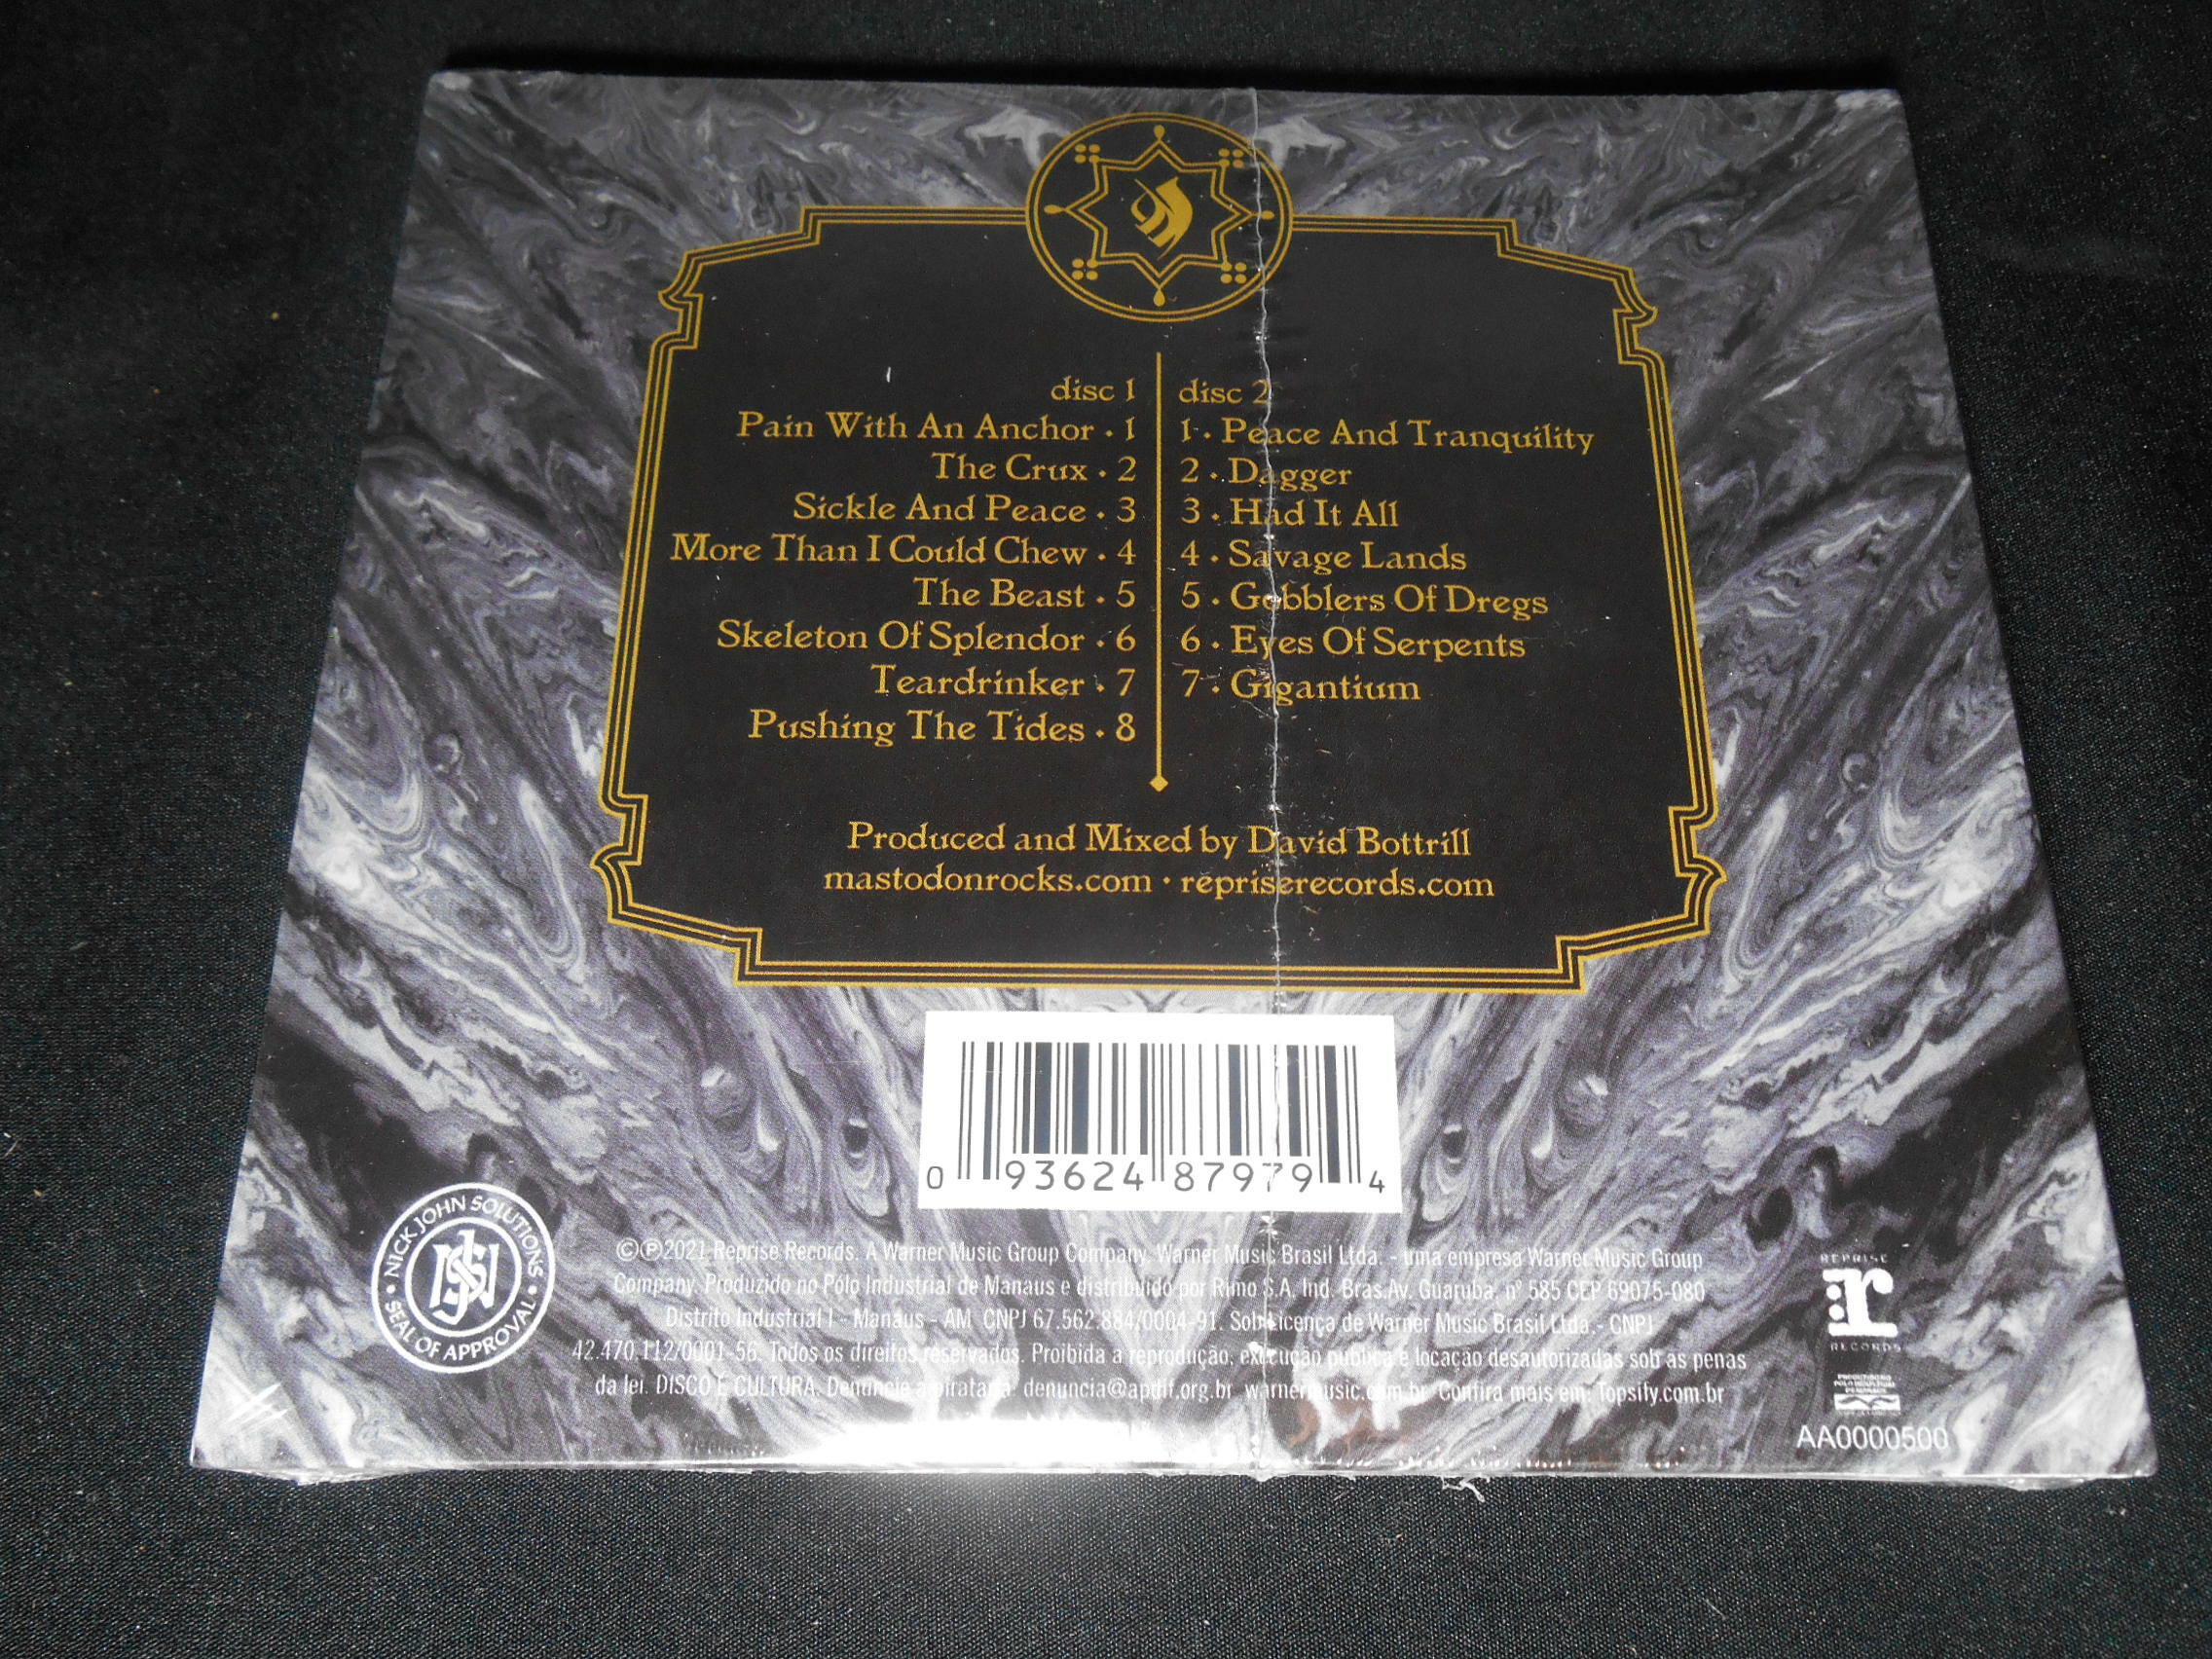 CD - Mastodon - Hushed and Grim (Lacrado/Duplo/Papersleeve)